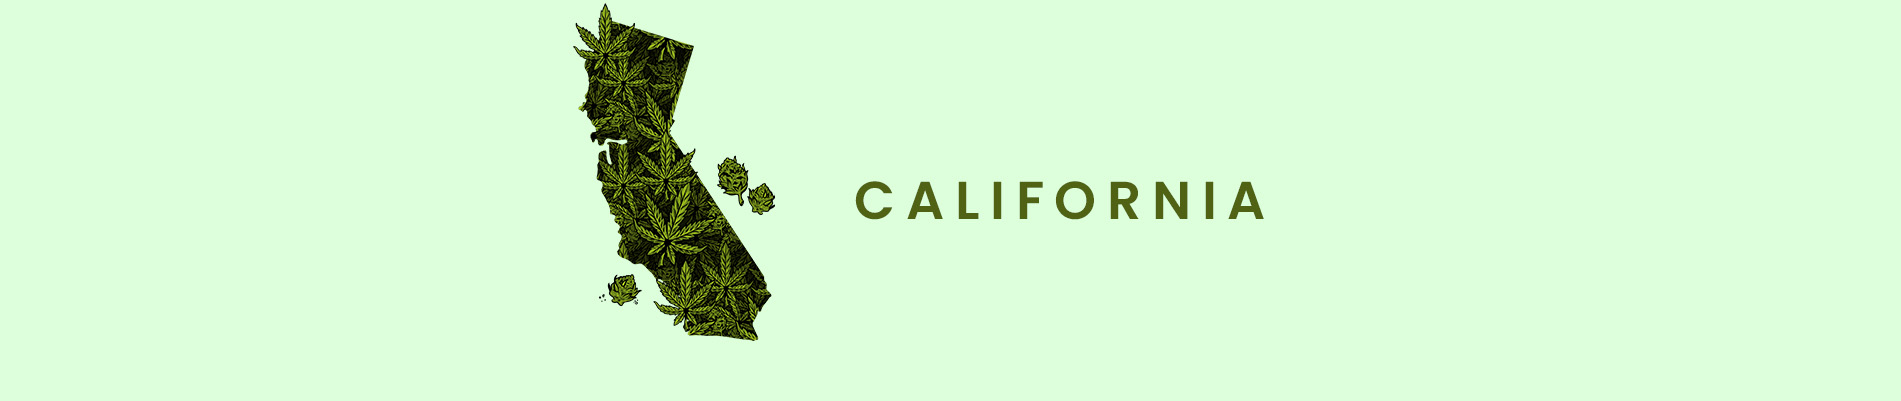 California guide banner